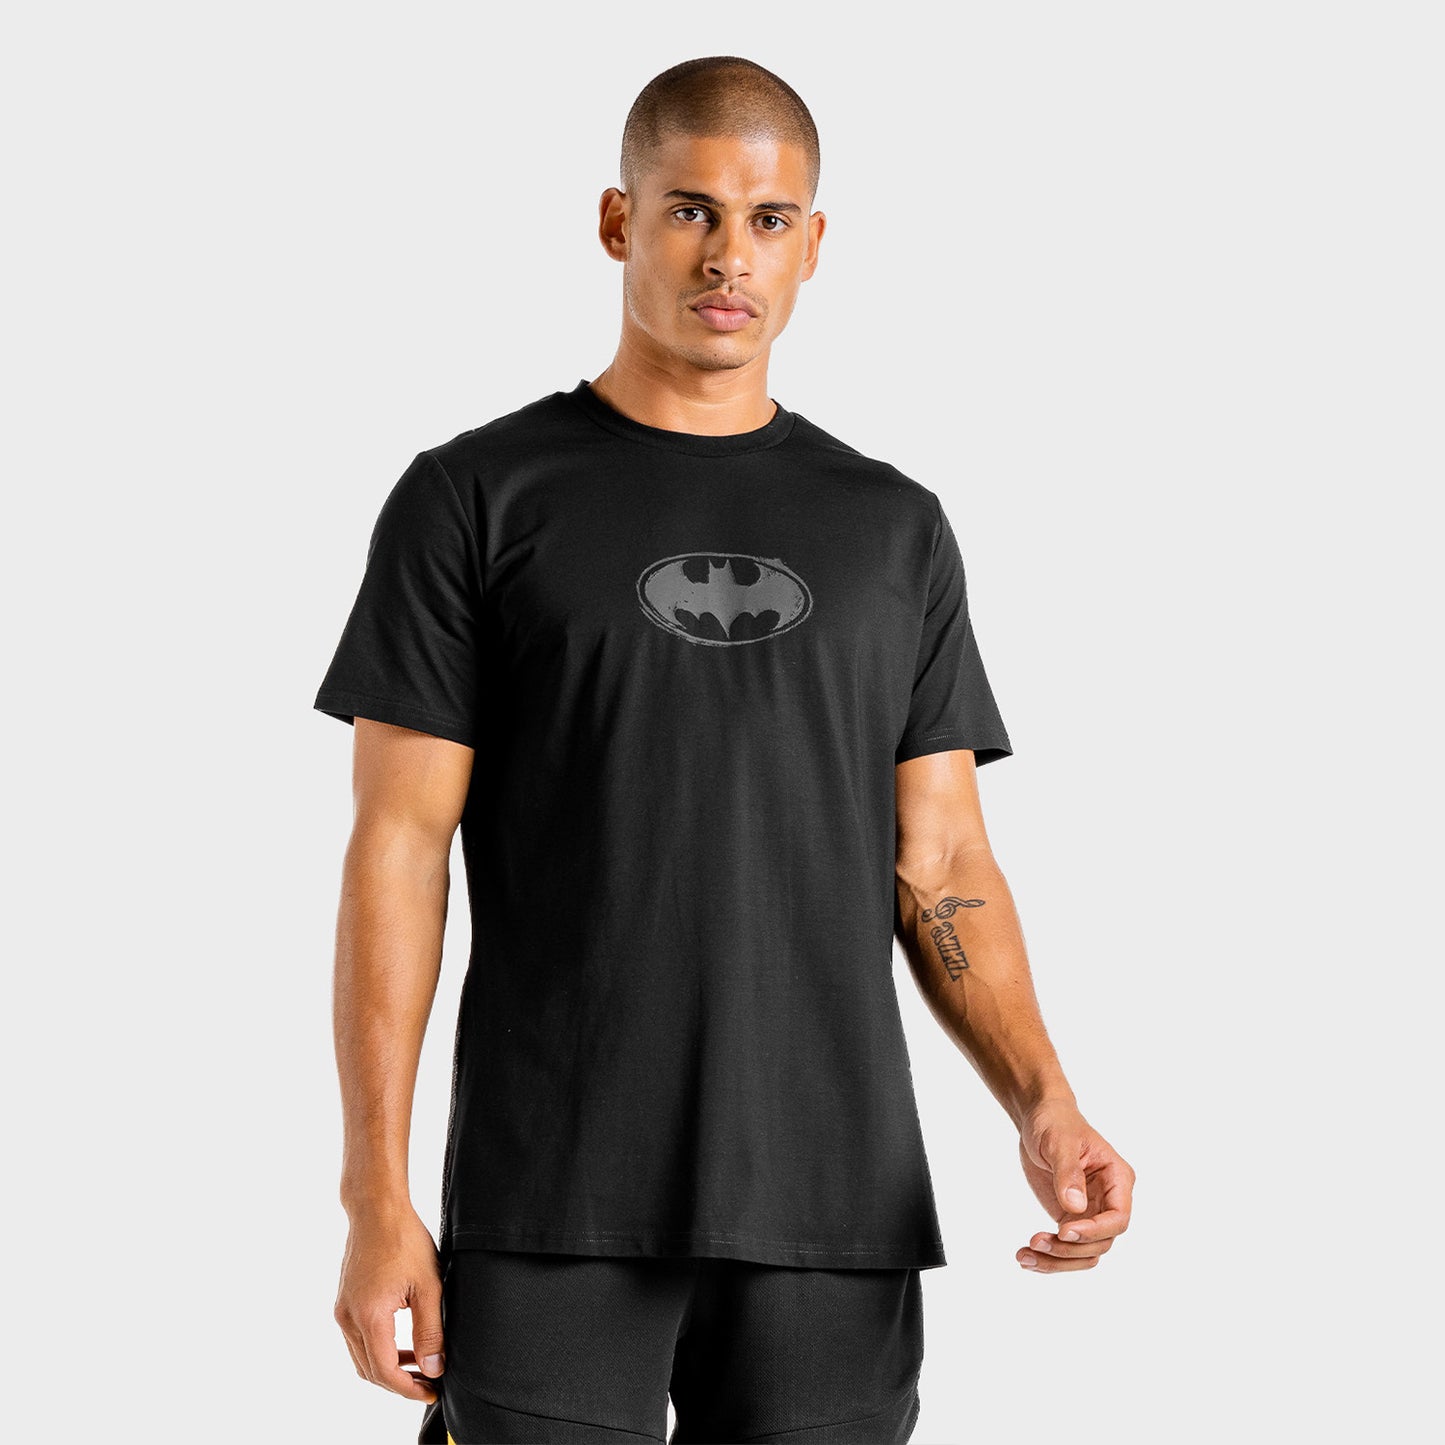 squatwolf-gym-wear-workout-men-batman-workout-tee-black-shirt-for